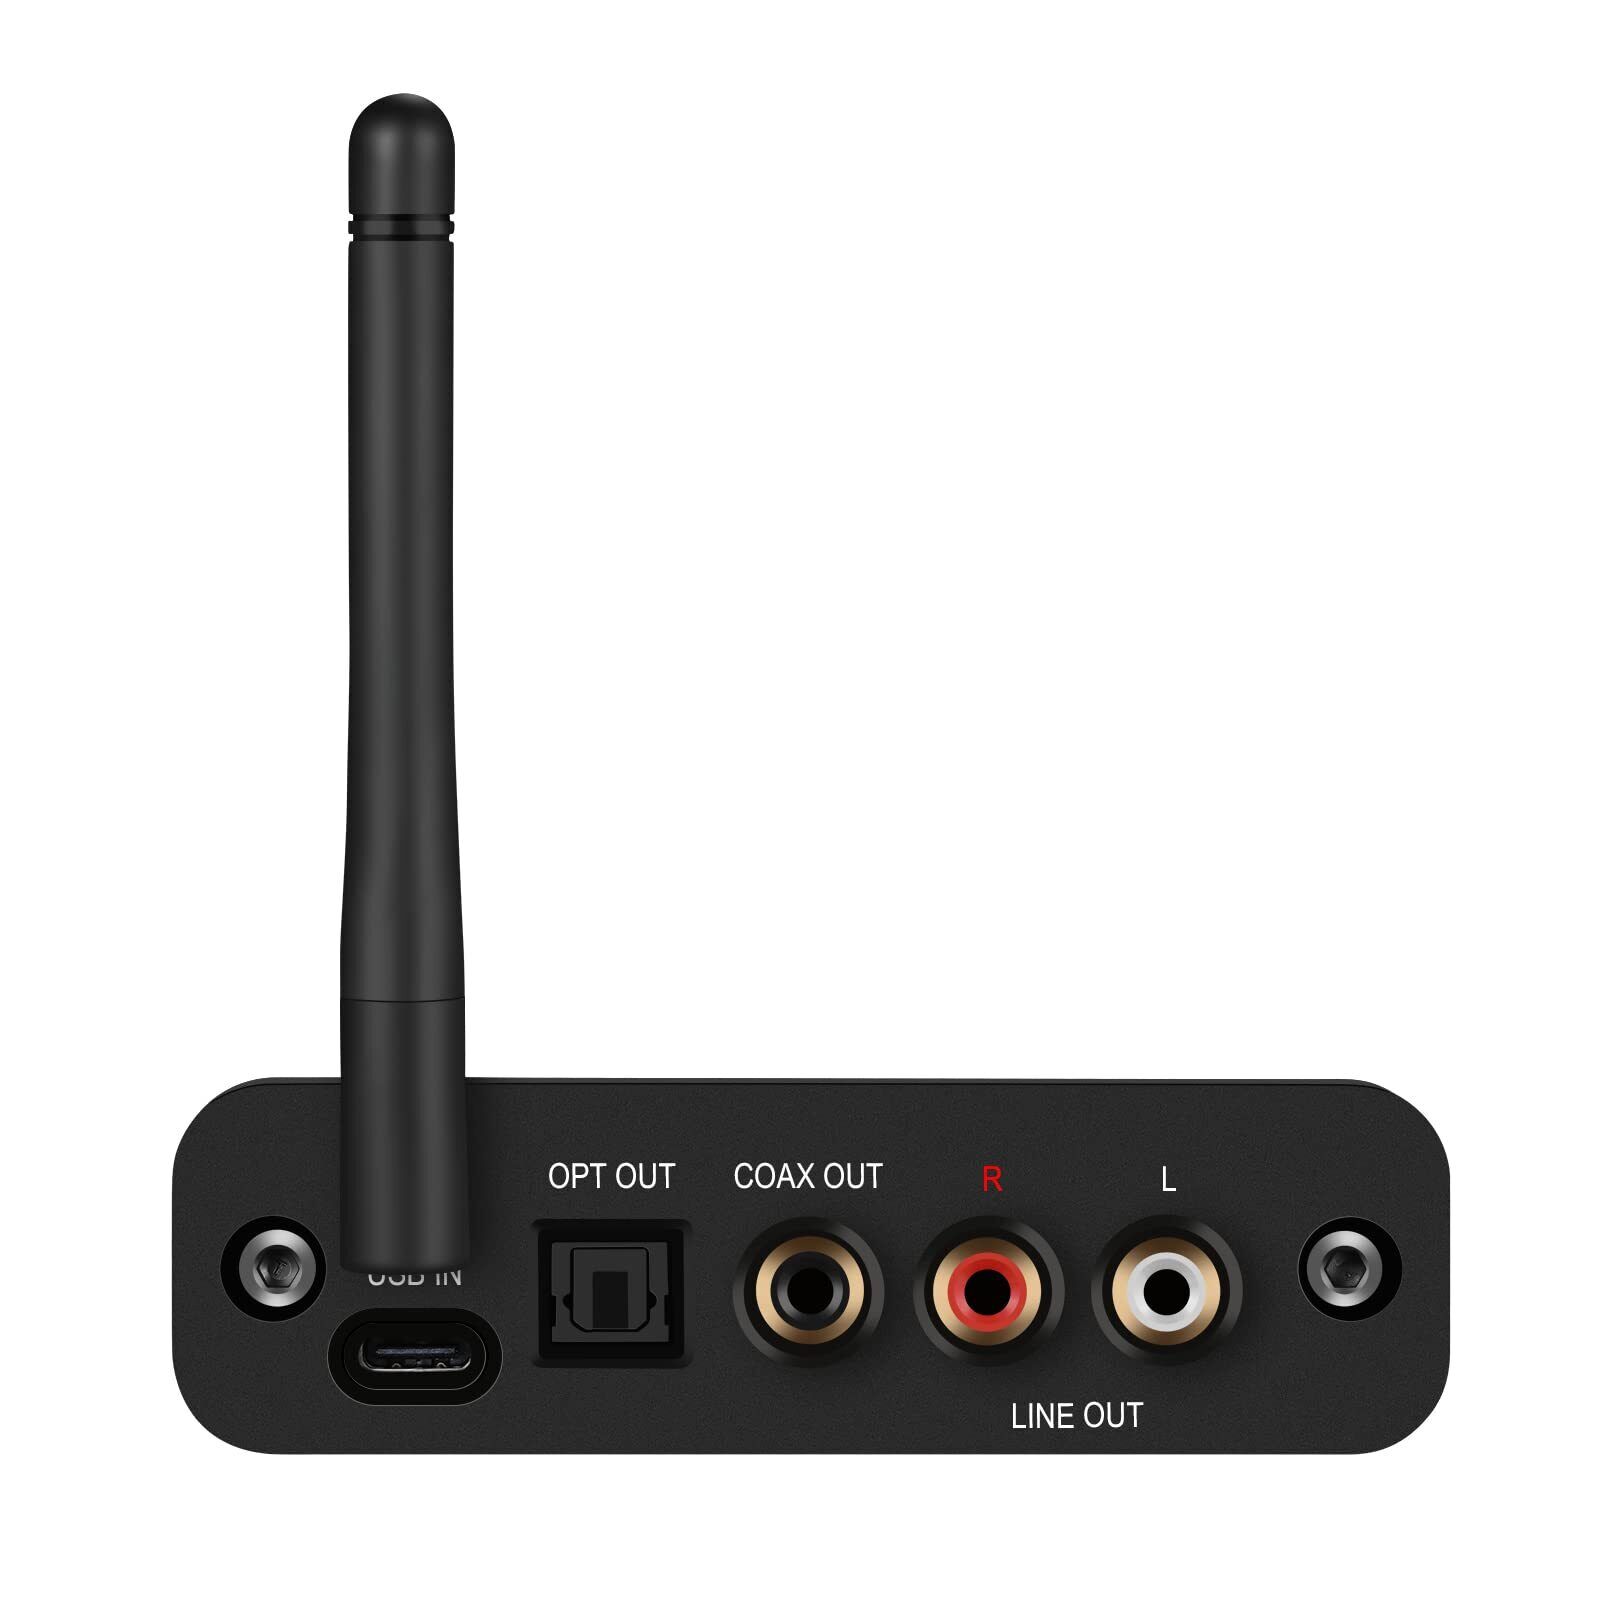 B2 aptX HD LDAC True Hi-Fi Bluetooth v5.1 Audio Receiver, Built-in ESS DAC fo...